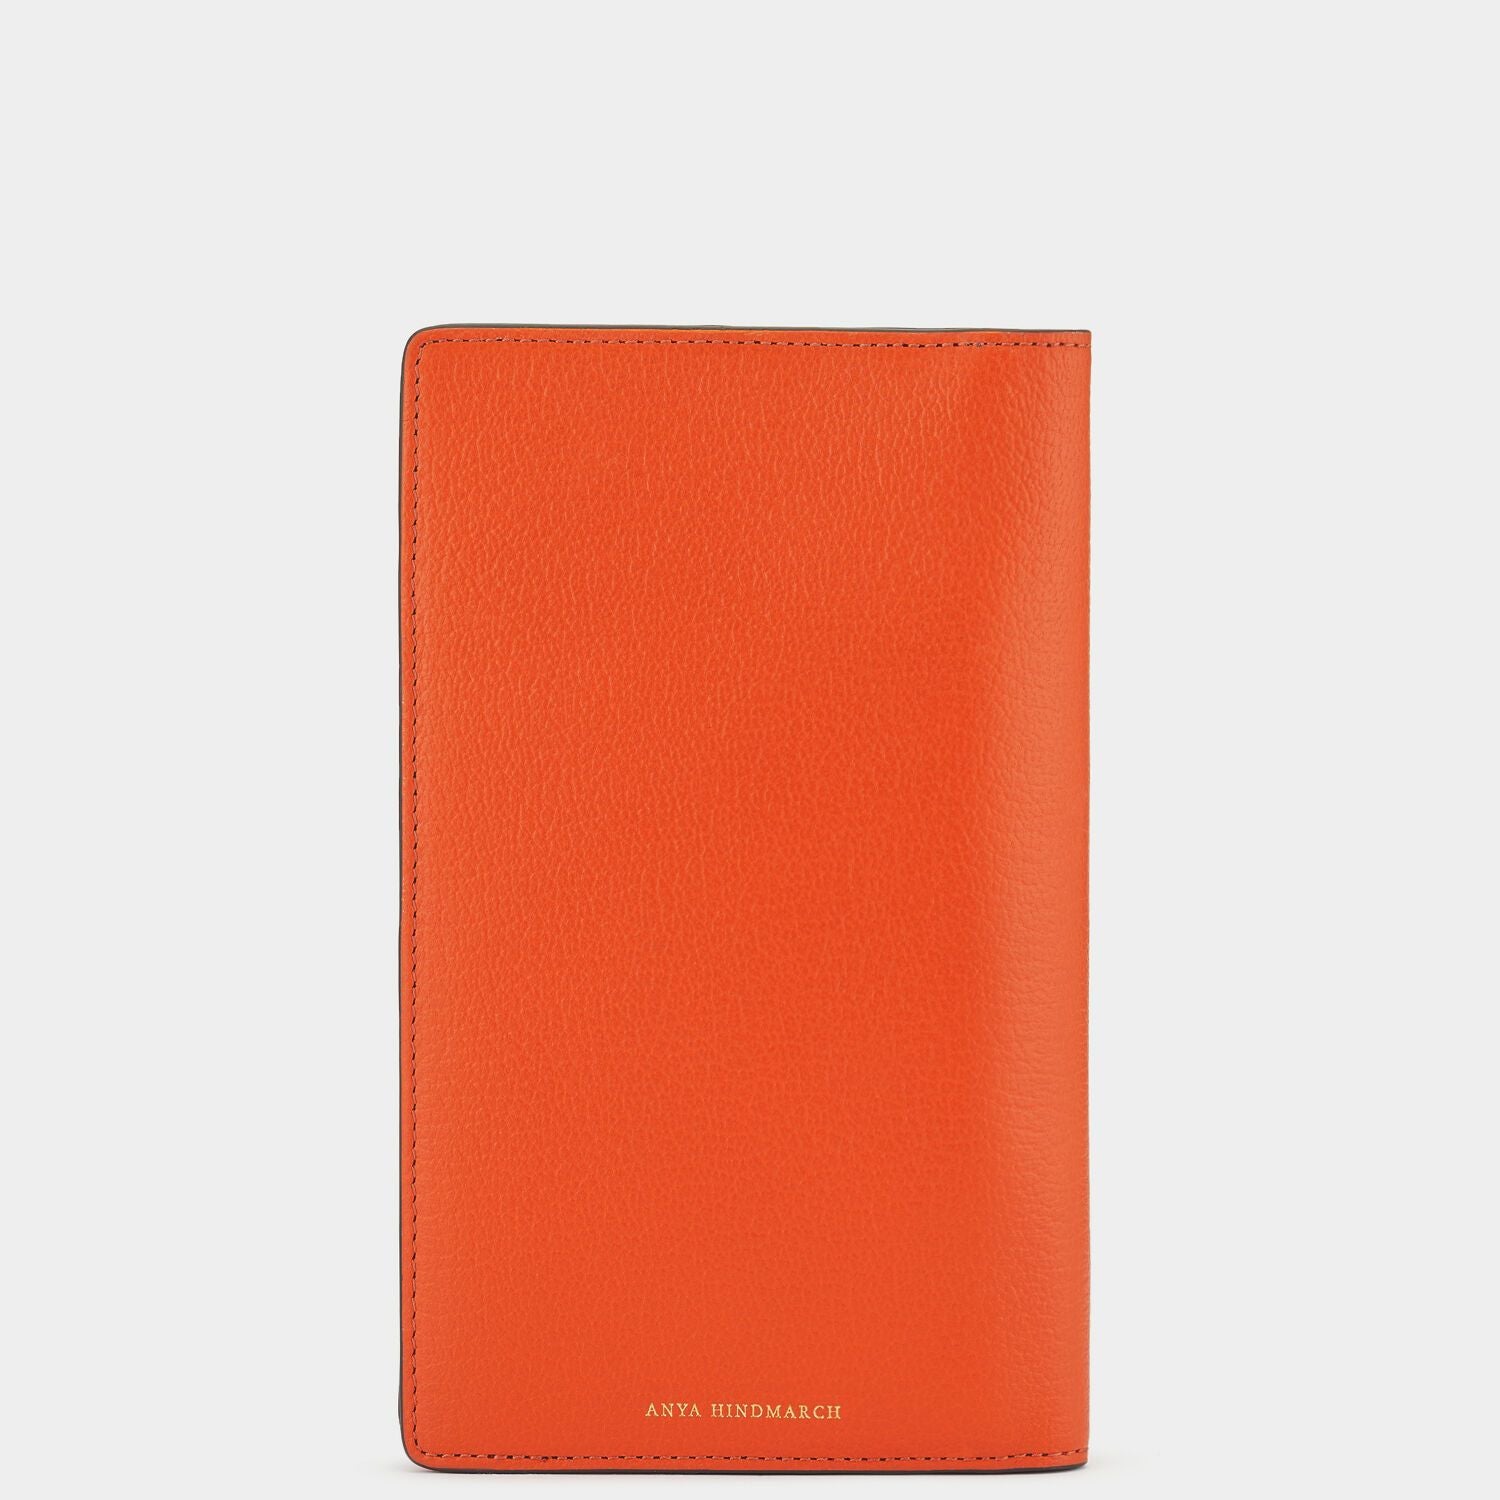 ANYA HINDMARCH オレンジ財布ファッション小物 - 財布